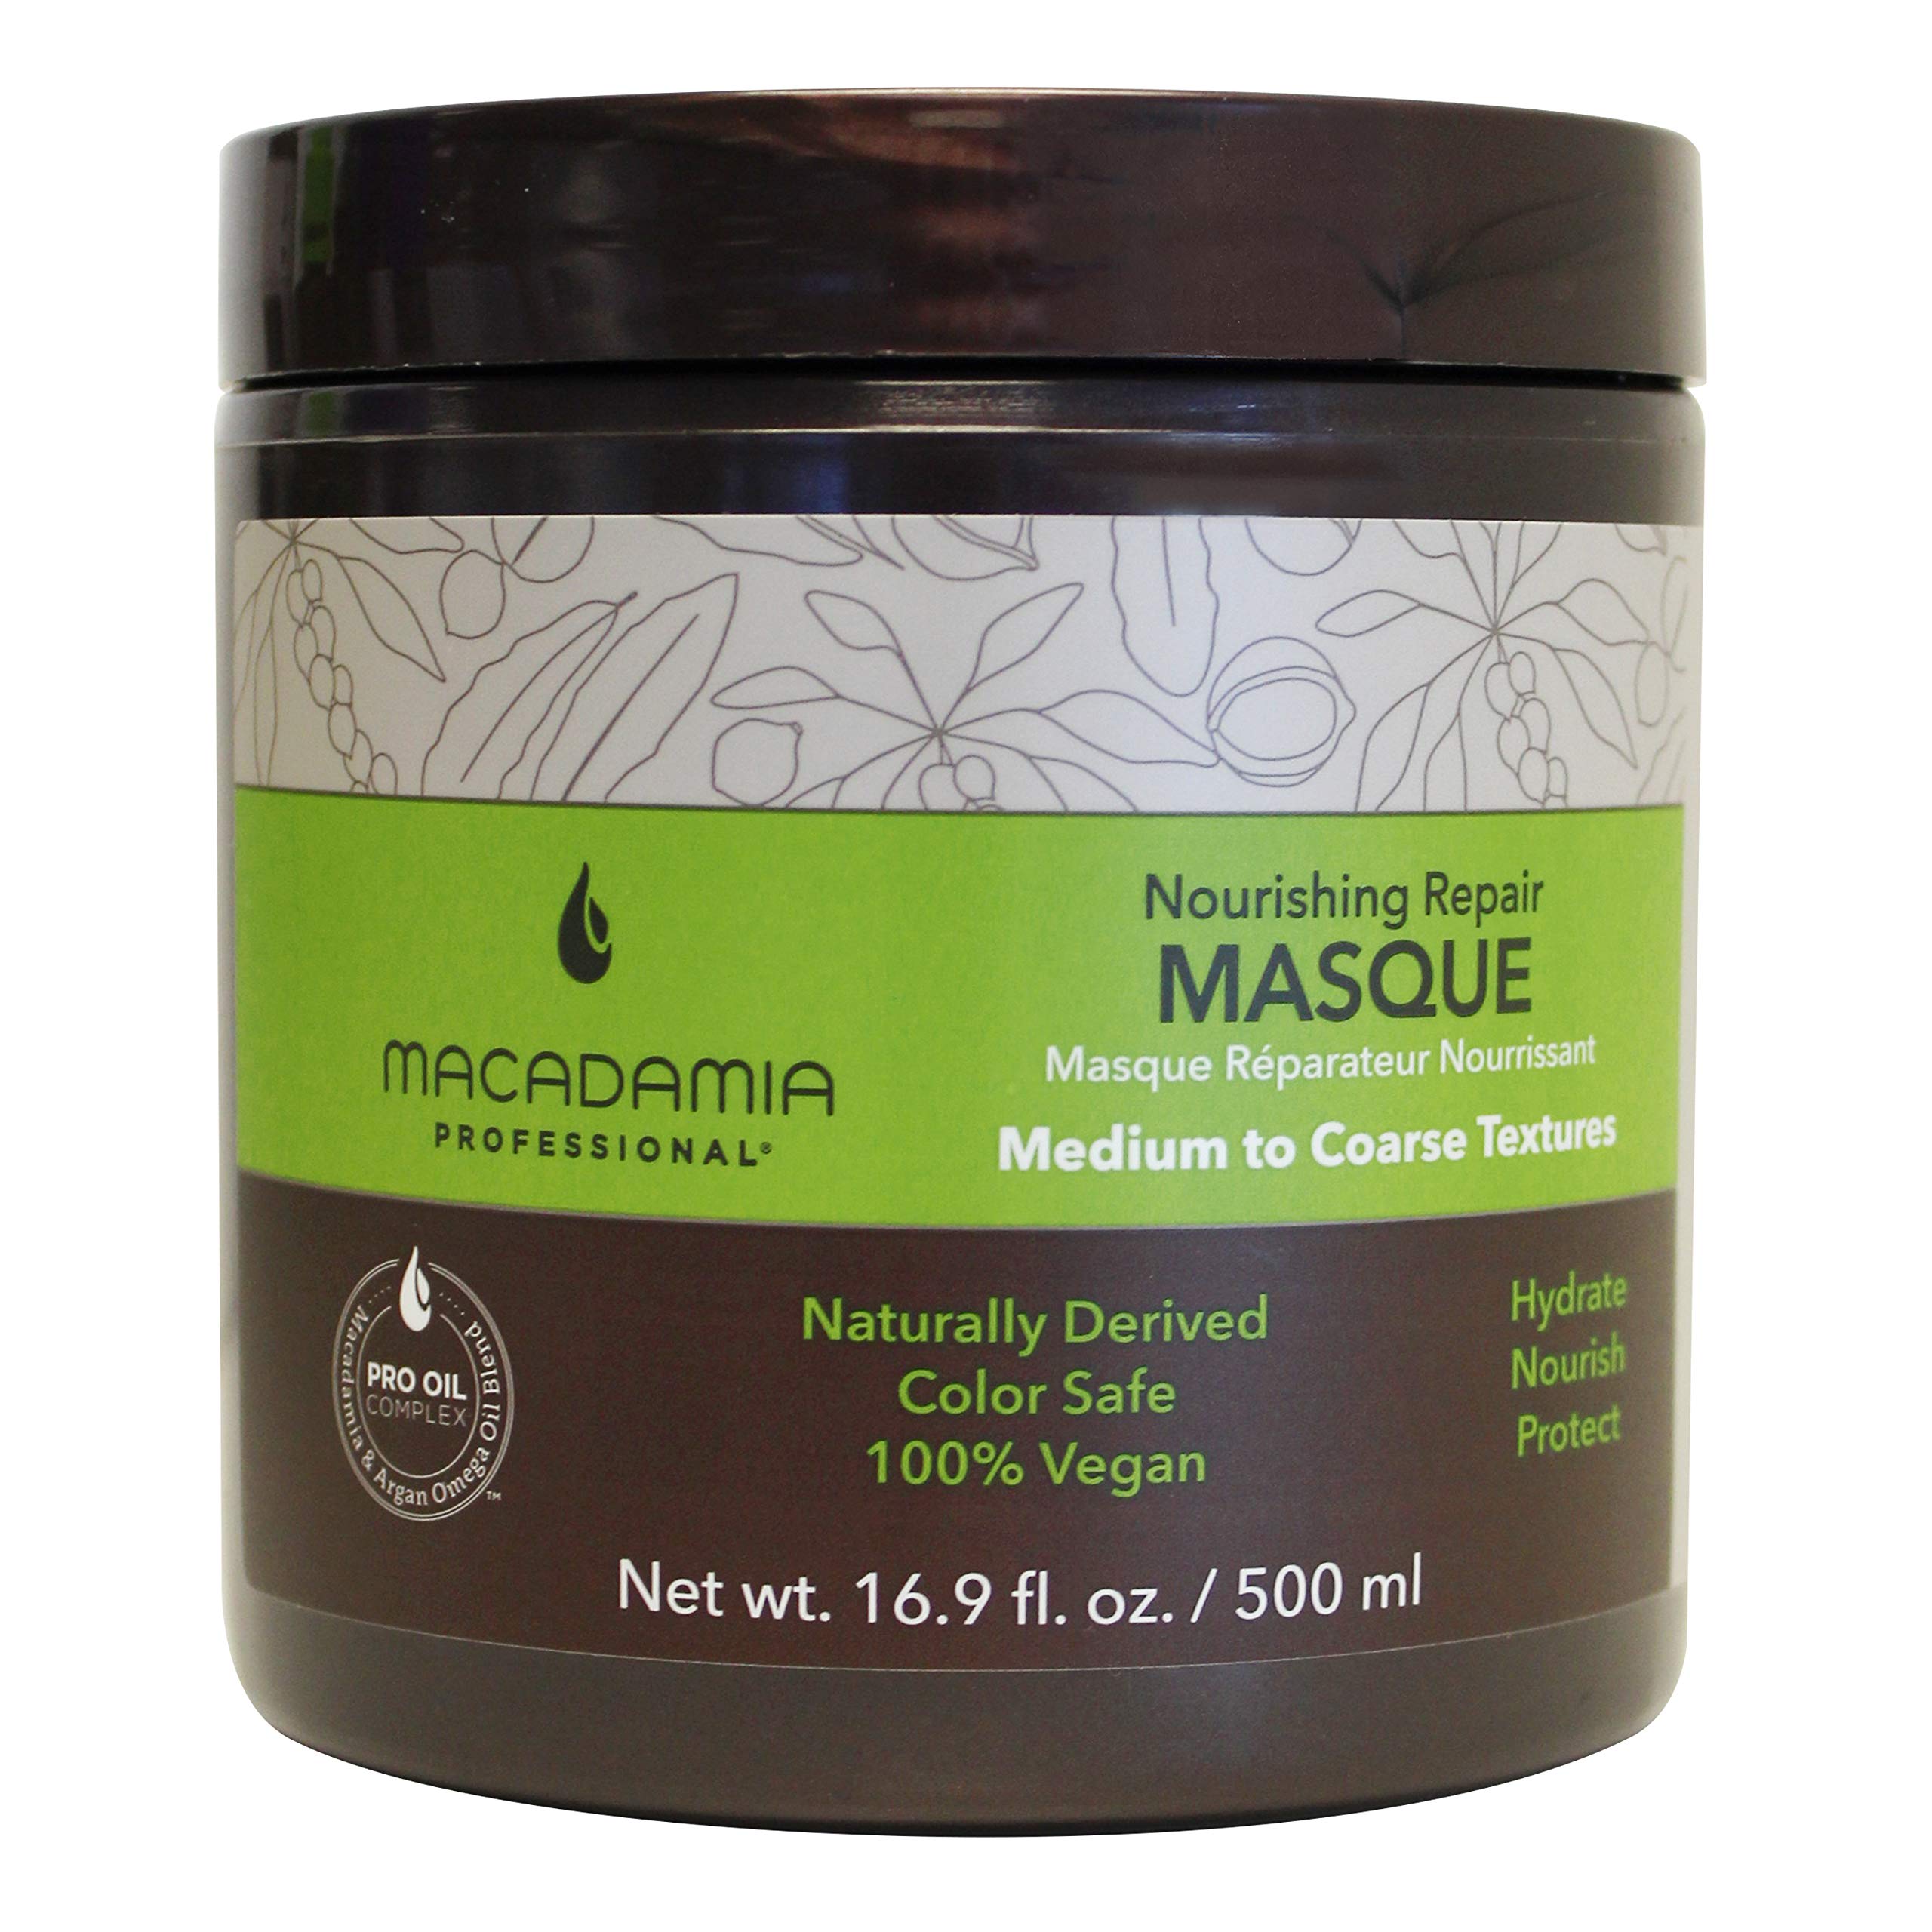 Macadamia Professional Nourishing Repair Masque, 500 ml Unparfümiert